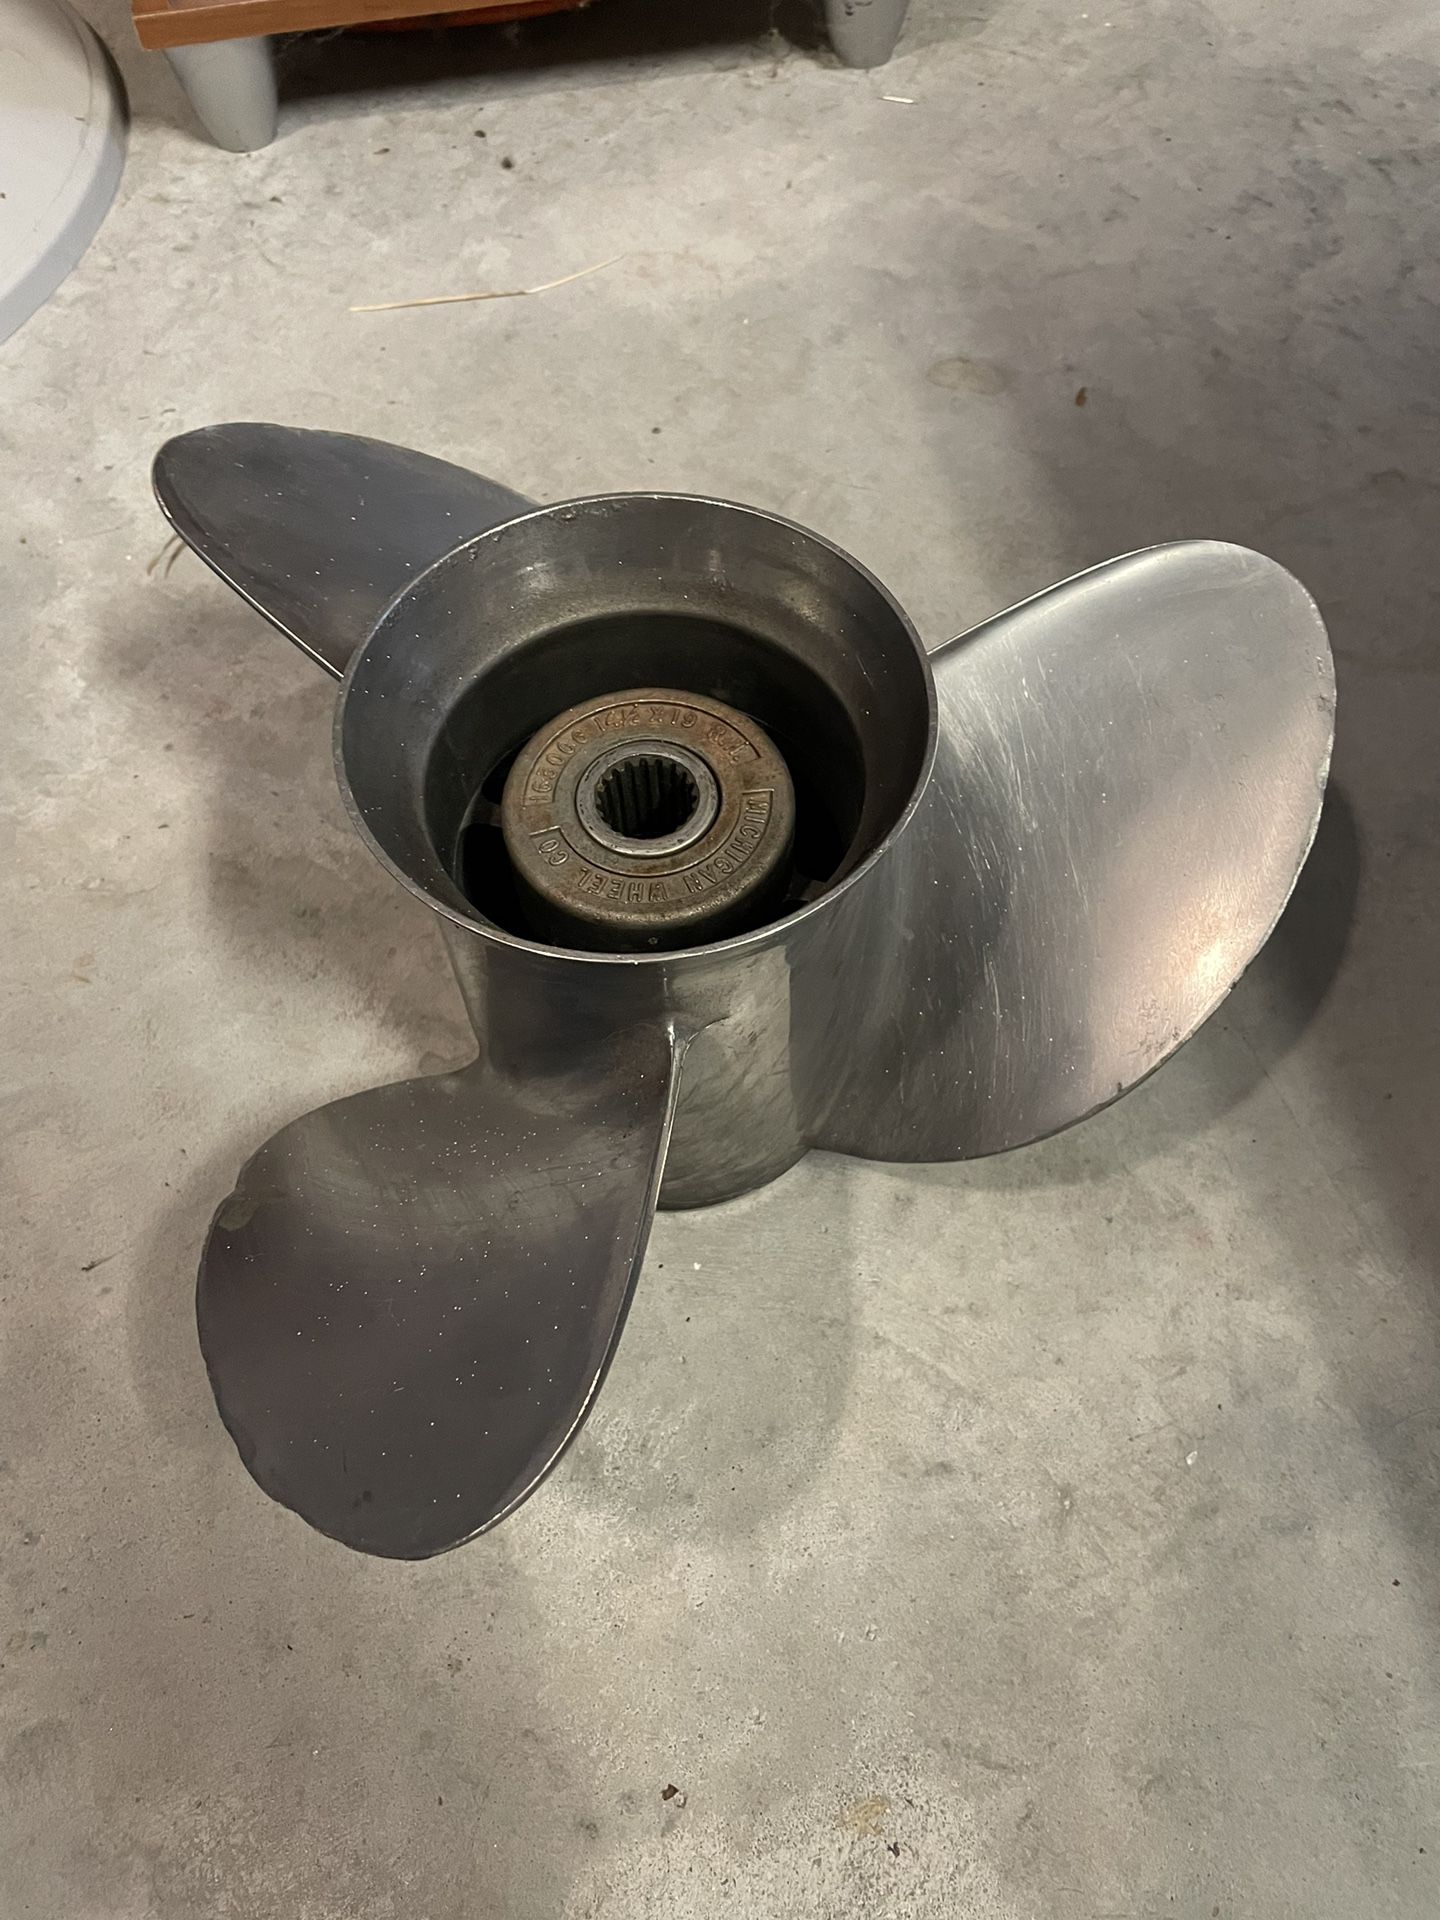 Stainless steel boat propeller  14.5 X 19 